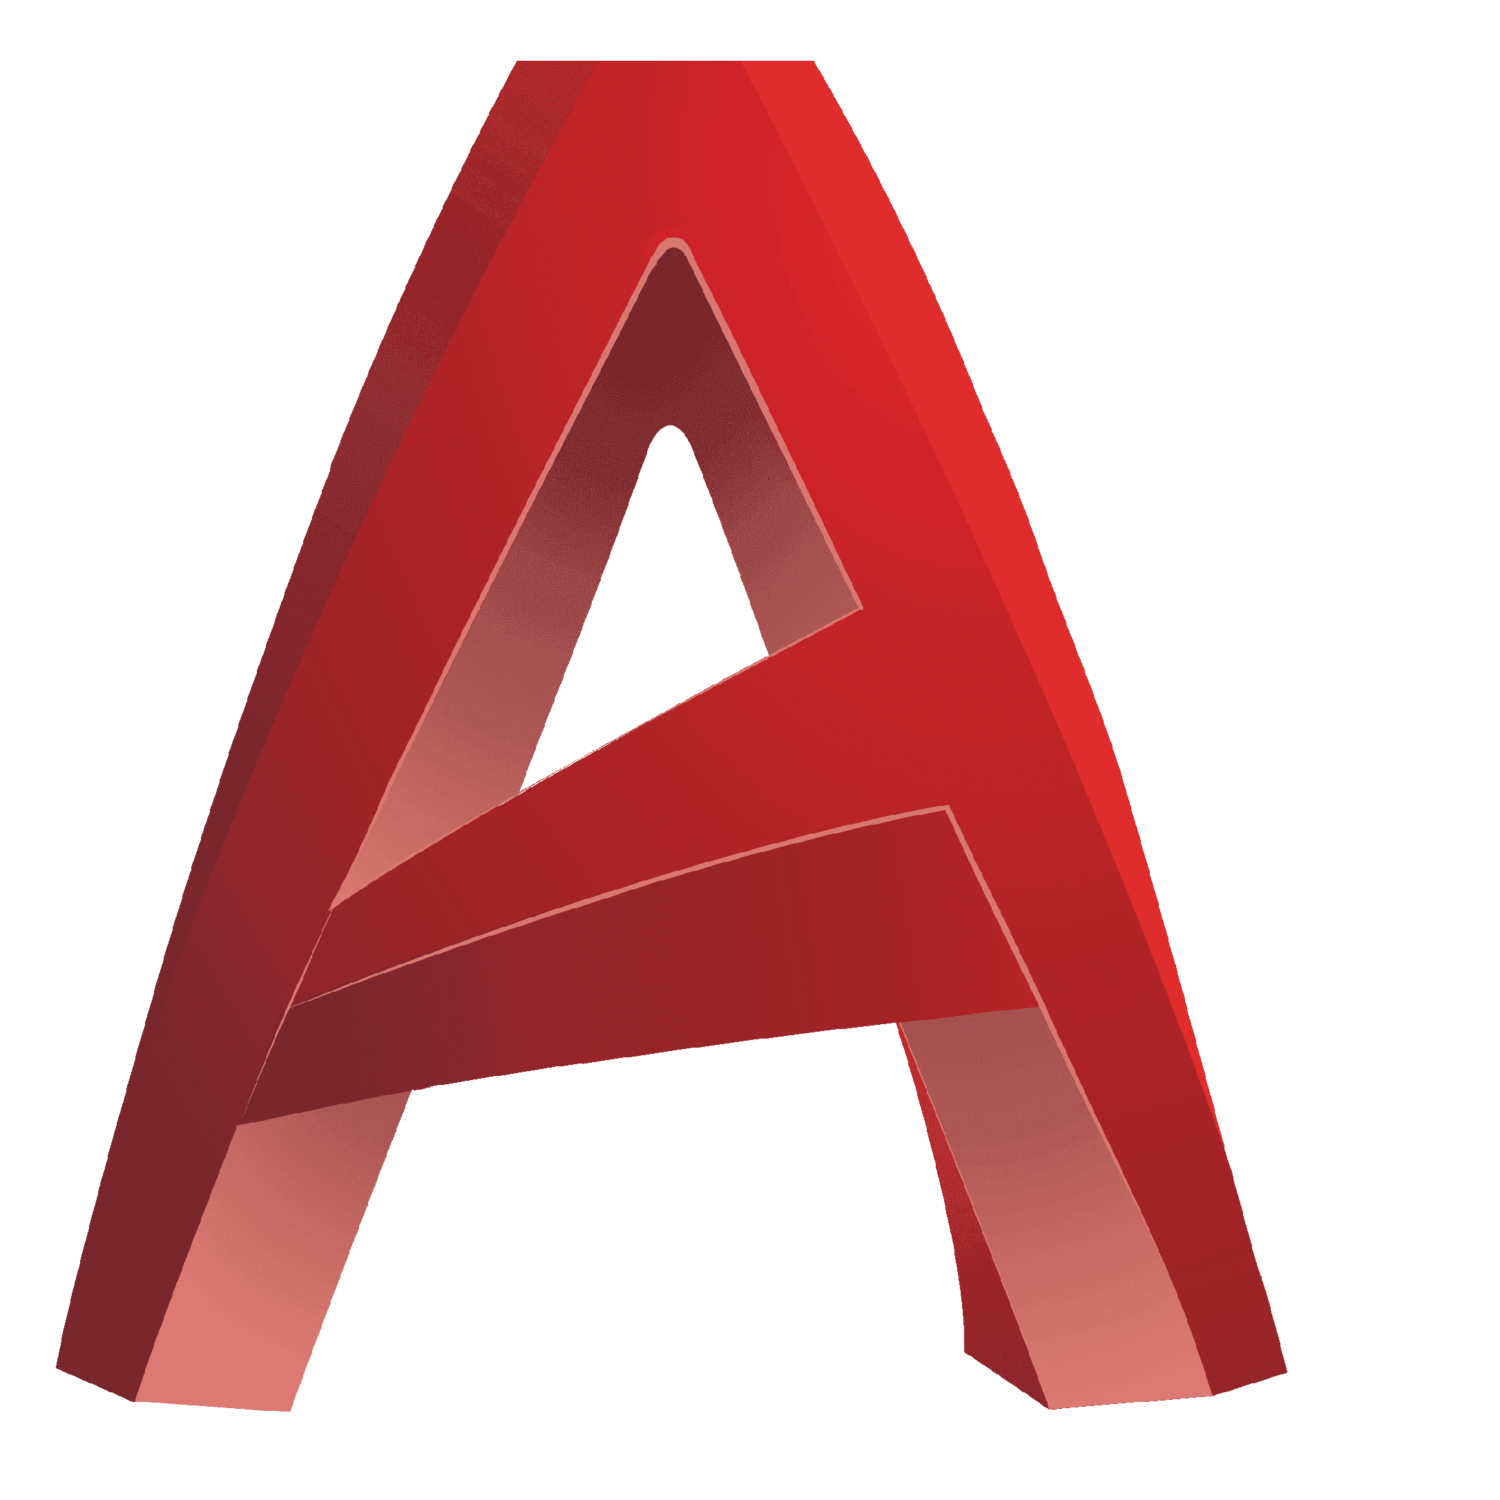 Autocad-Logo